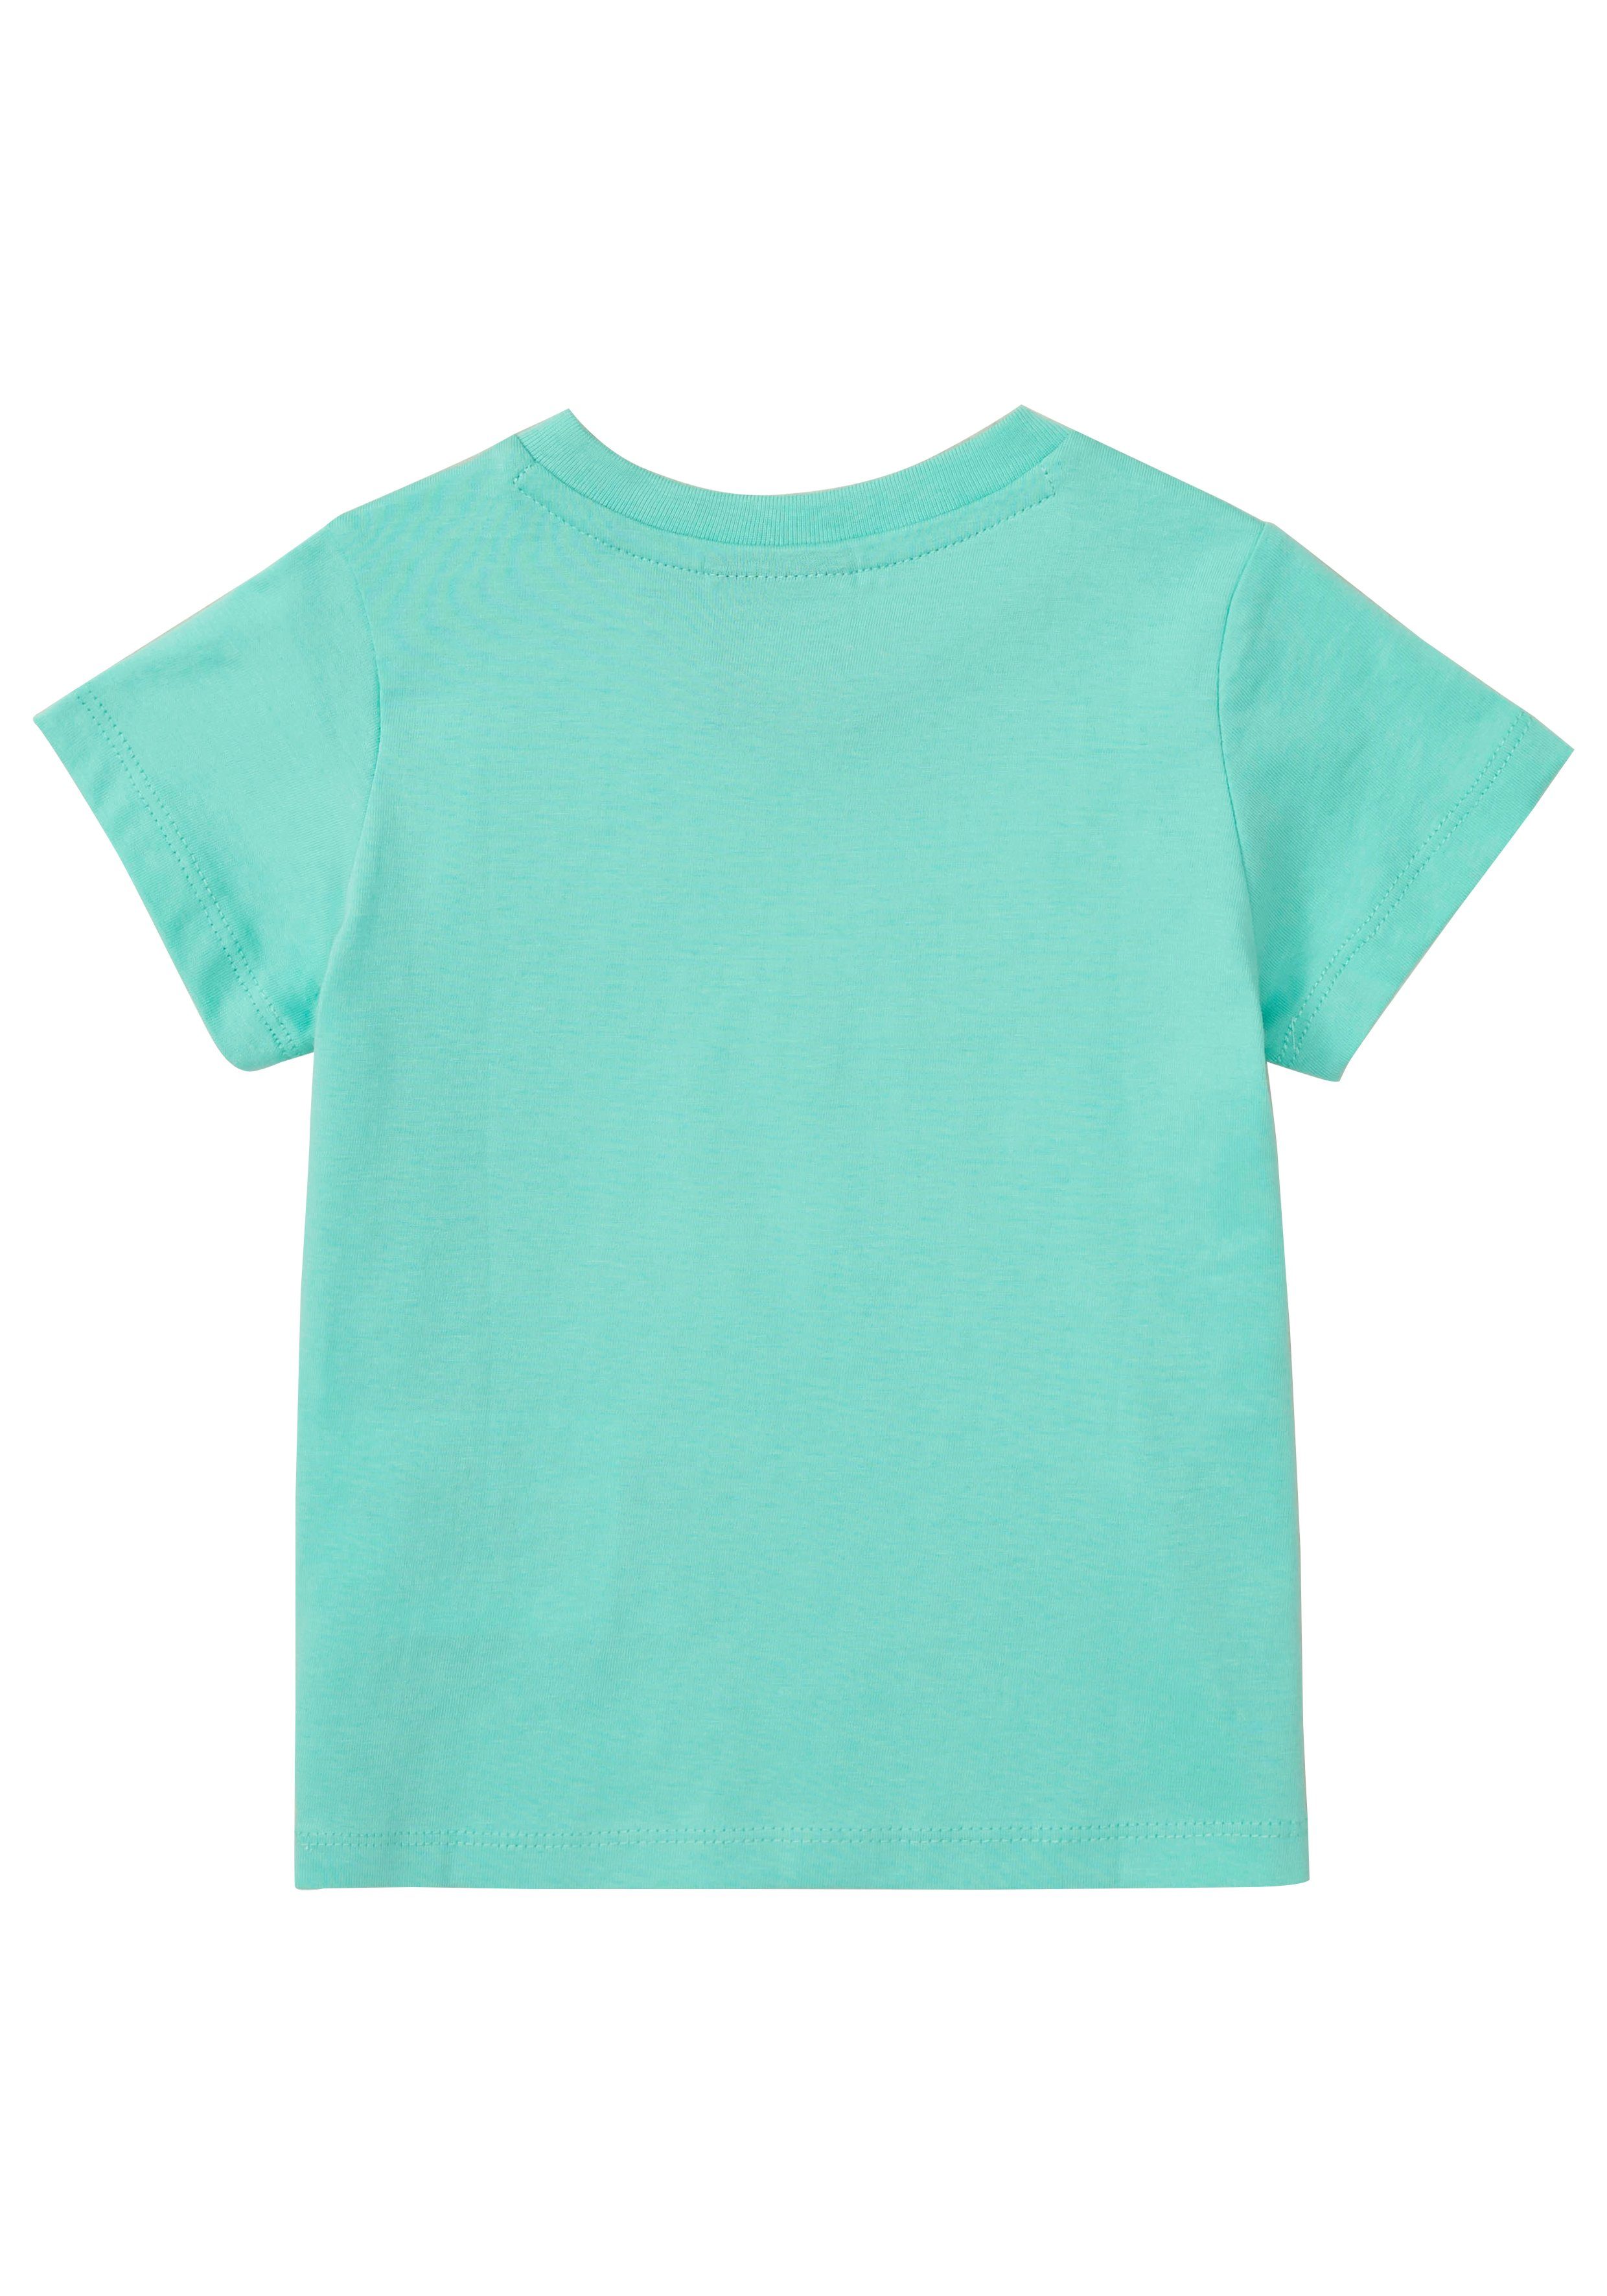 Champion T-shirt Toddler Classic 3 pack T-Shirt (set 3-delig)